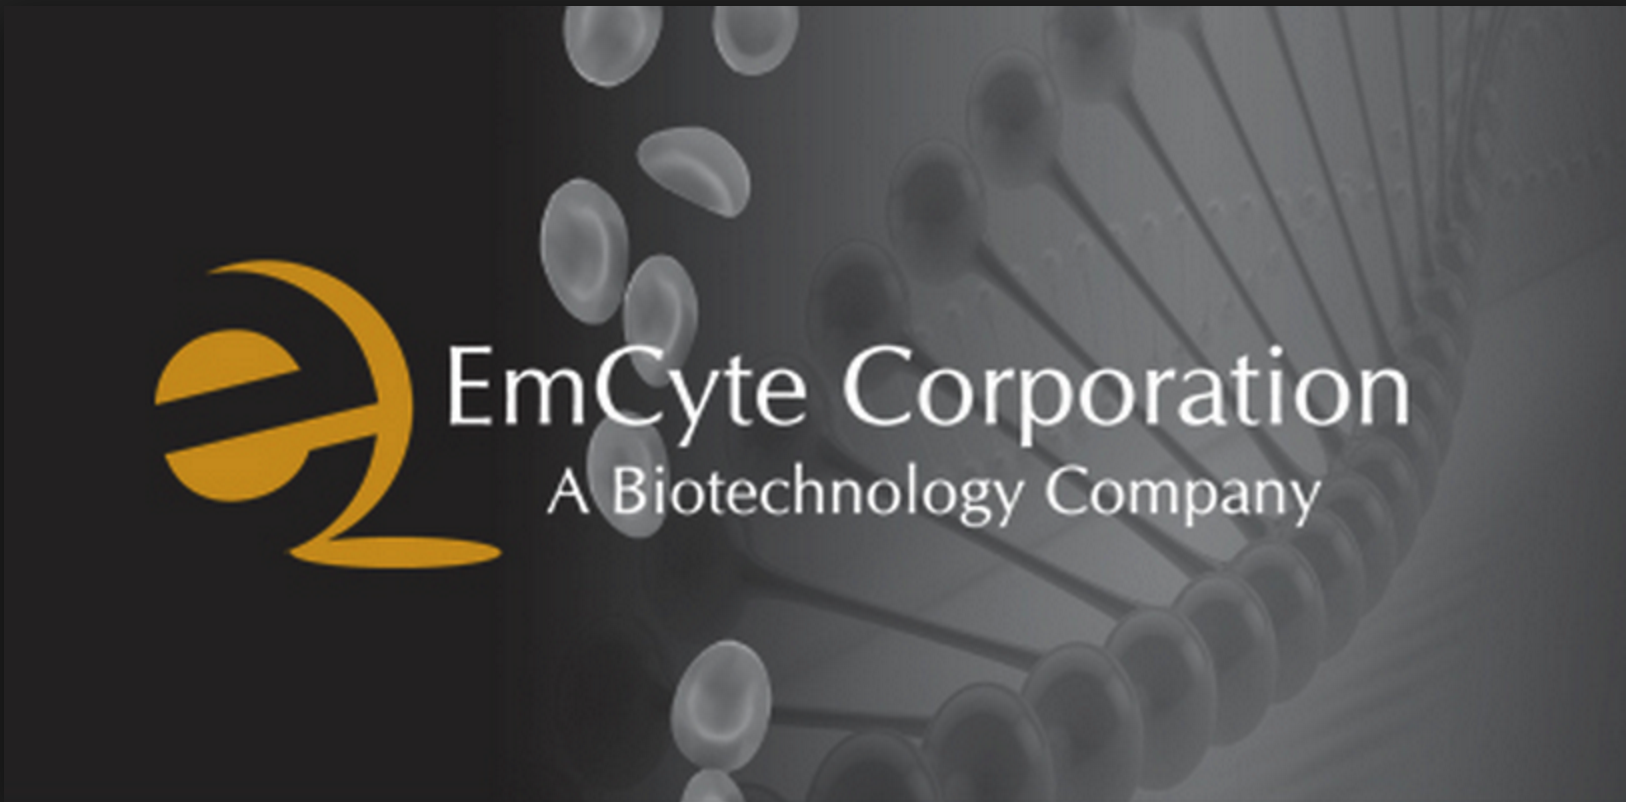 EmCyte Corporation